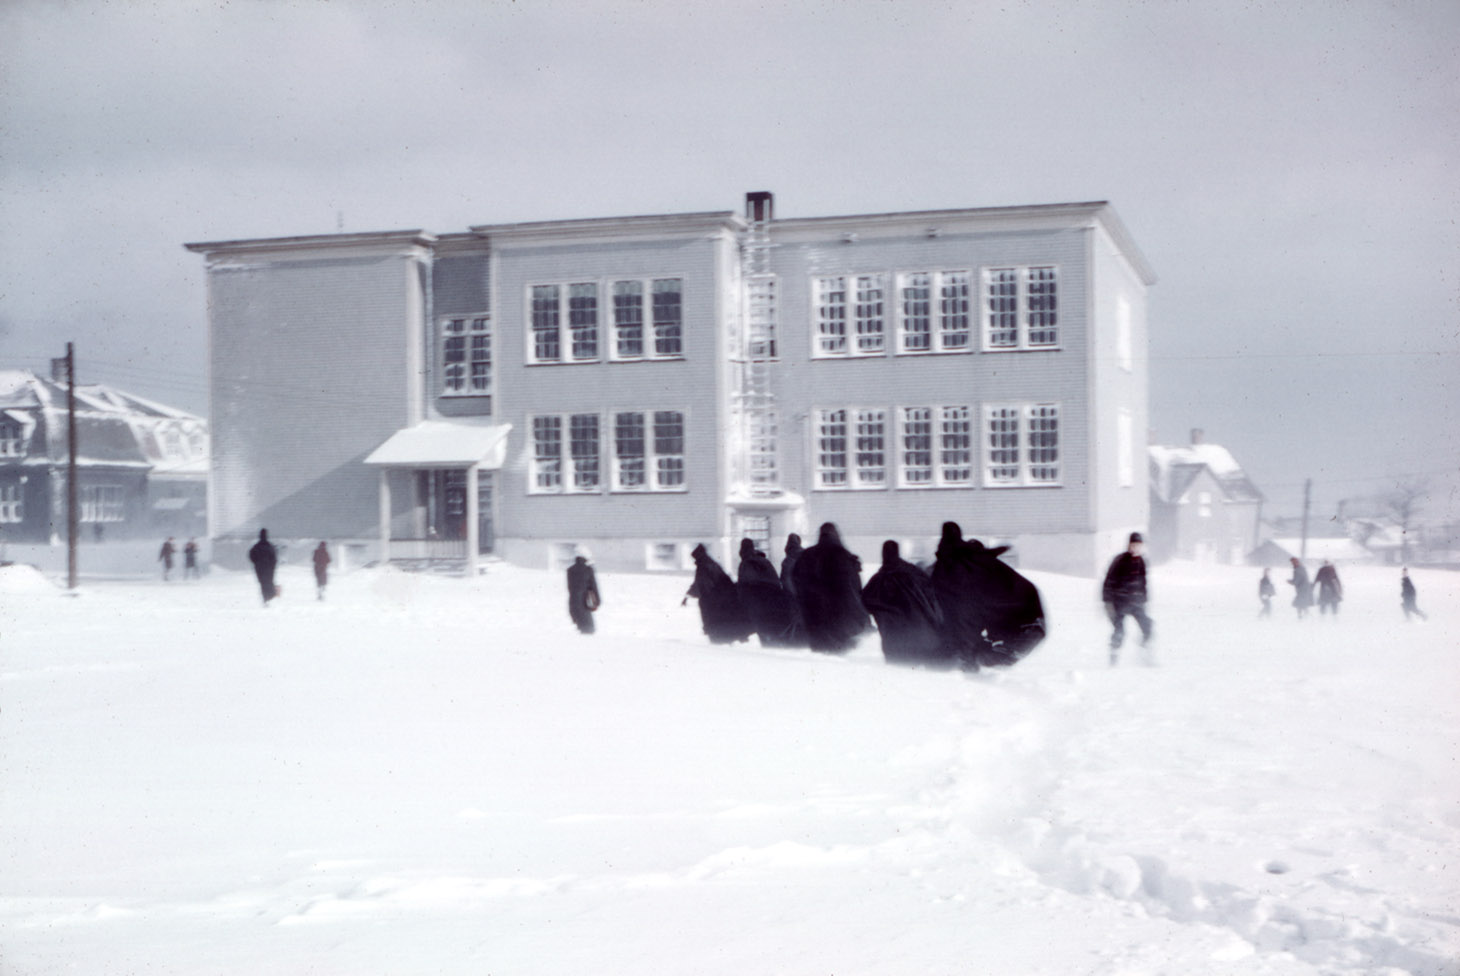 communityalbums - Walking to school in a blizzard, Saint Anne's School, Glace Bay, Nova Scotia.